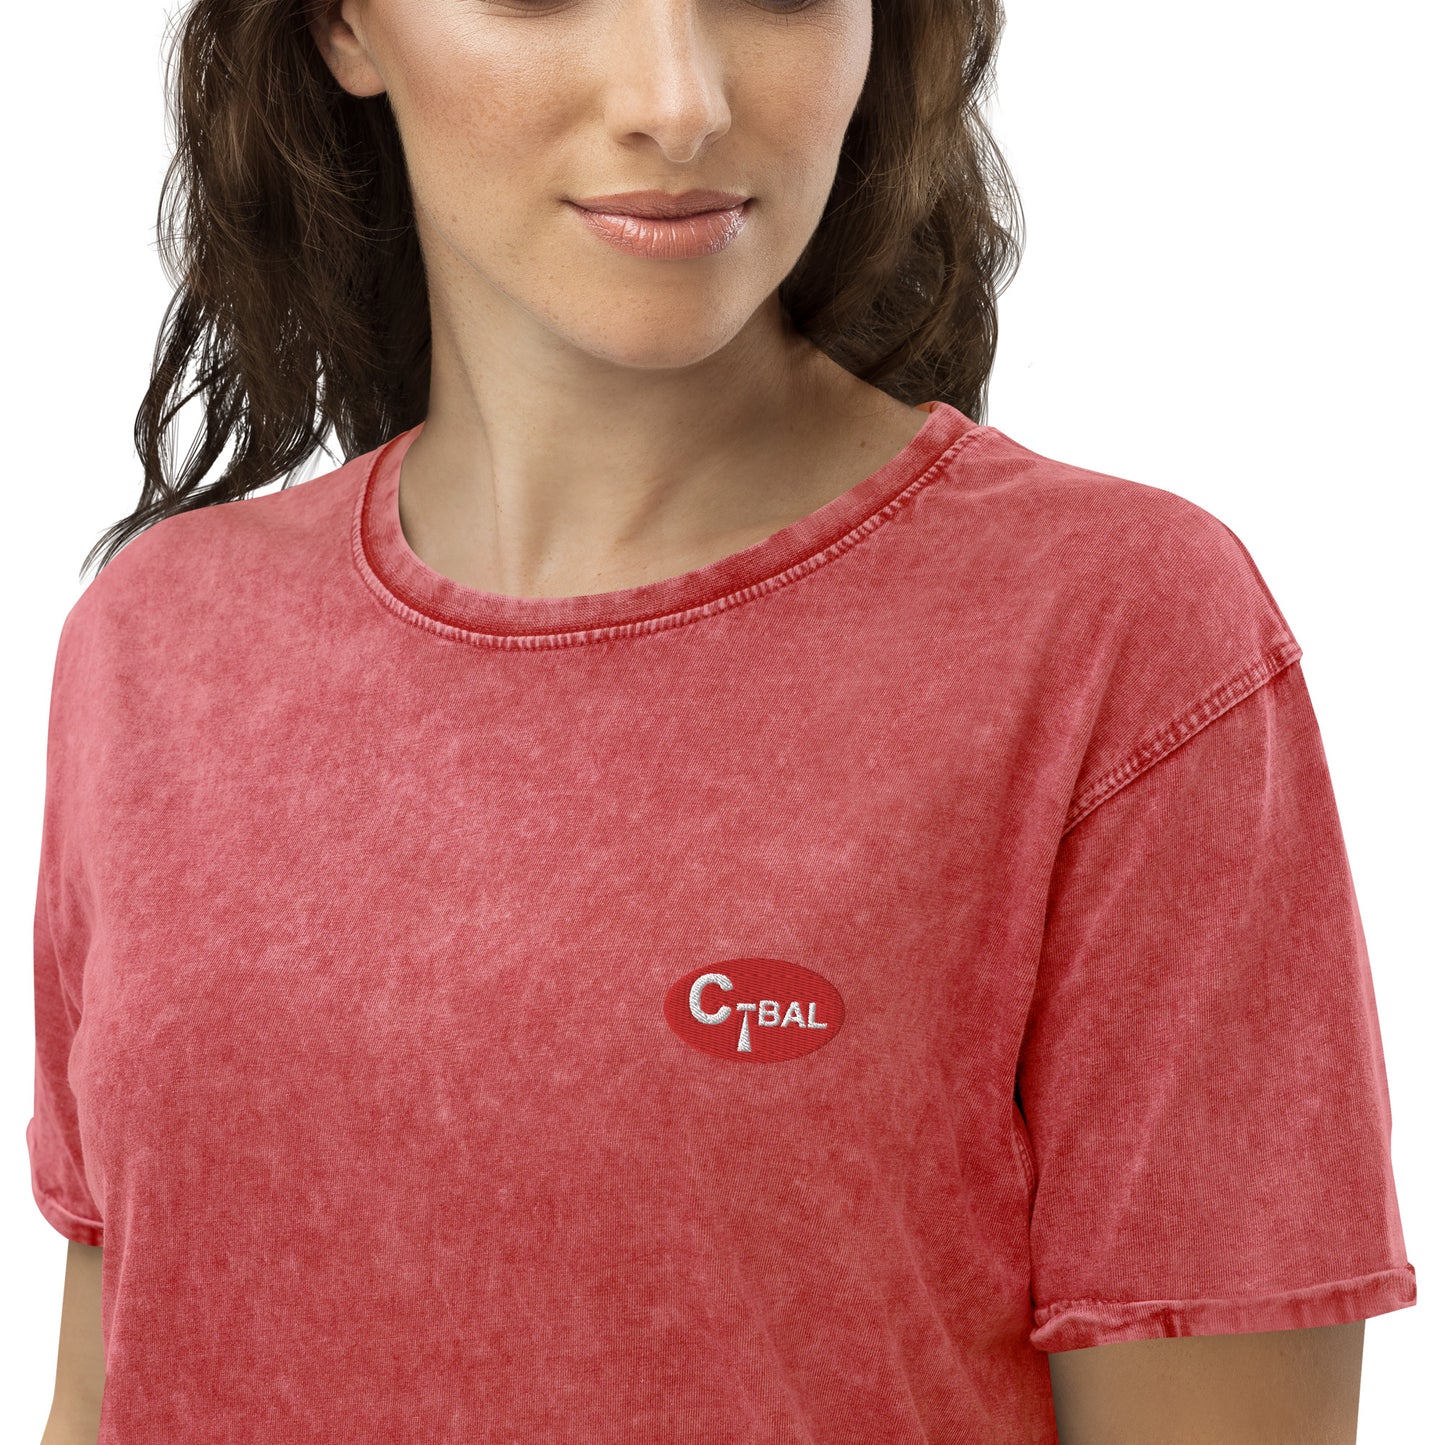 B002 - Denim T-shirt (C-BAL : Red / Embroidery Logo)